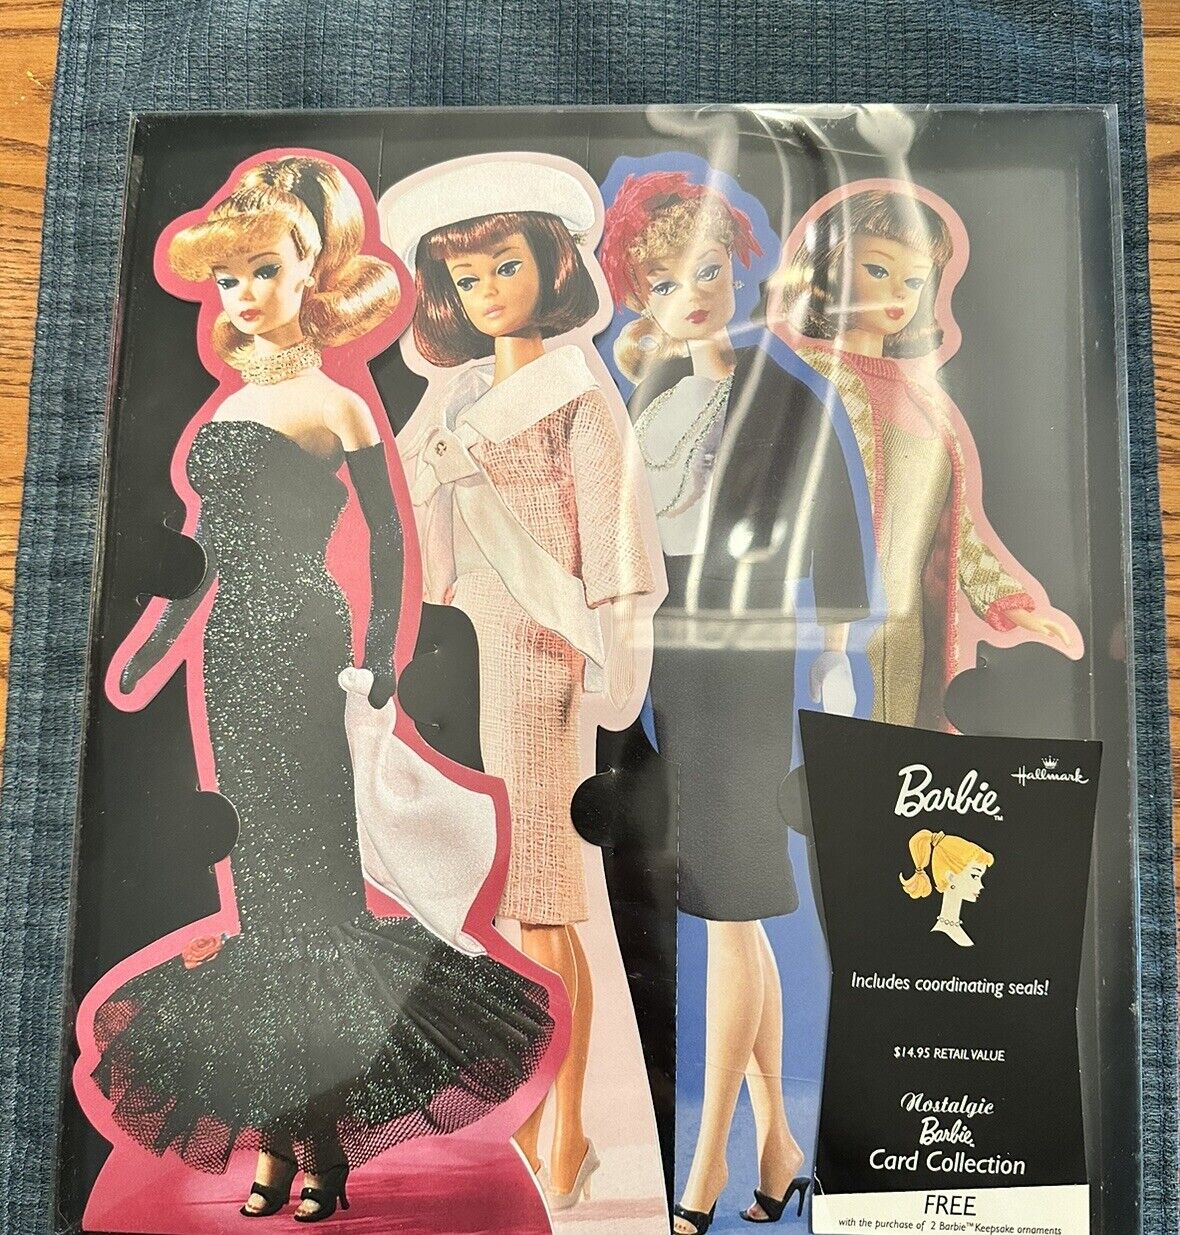 Hallmark Nostalgic Barbie Greeting Card Collection w/ envelopes 2003 NIB NRFB 